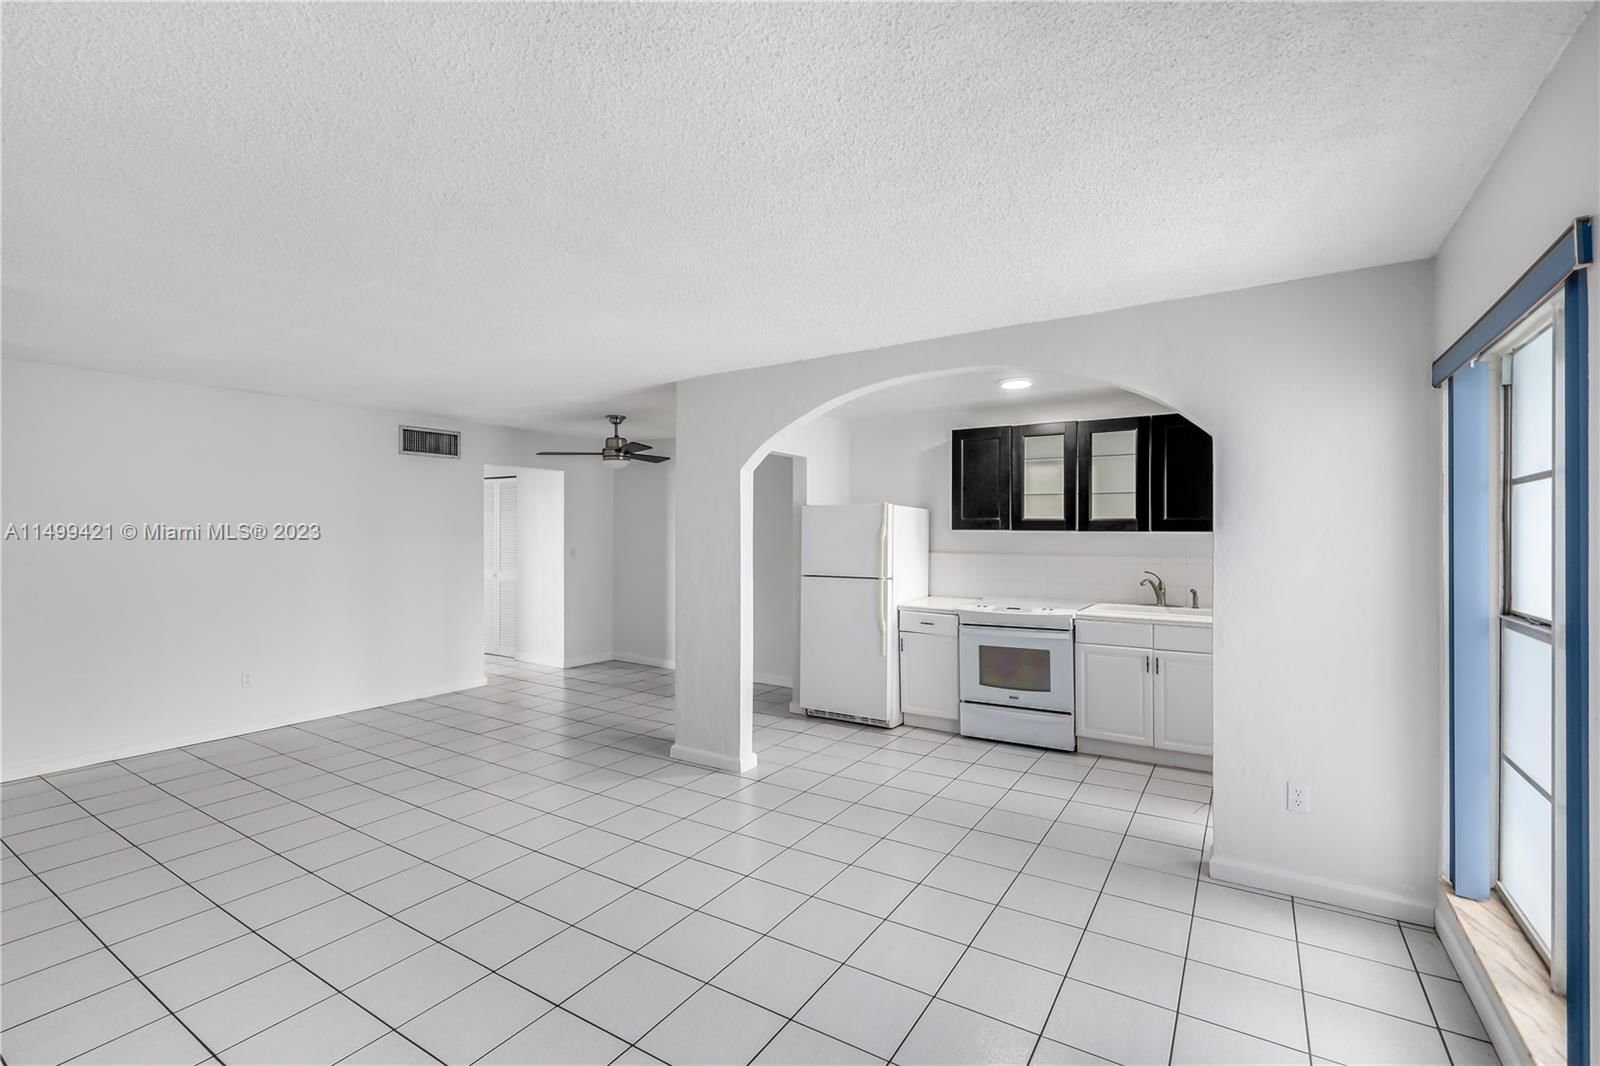 Real estate property located at 1340 Lincoln Rd #502, Miami-Dade County, GOLDEN HOUSE CONDO, Miami Beach, FL